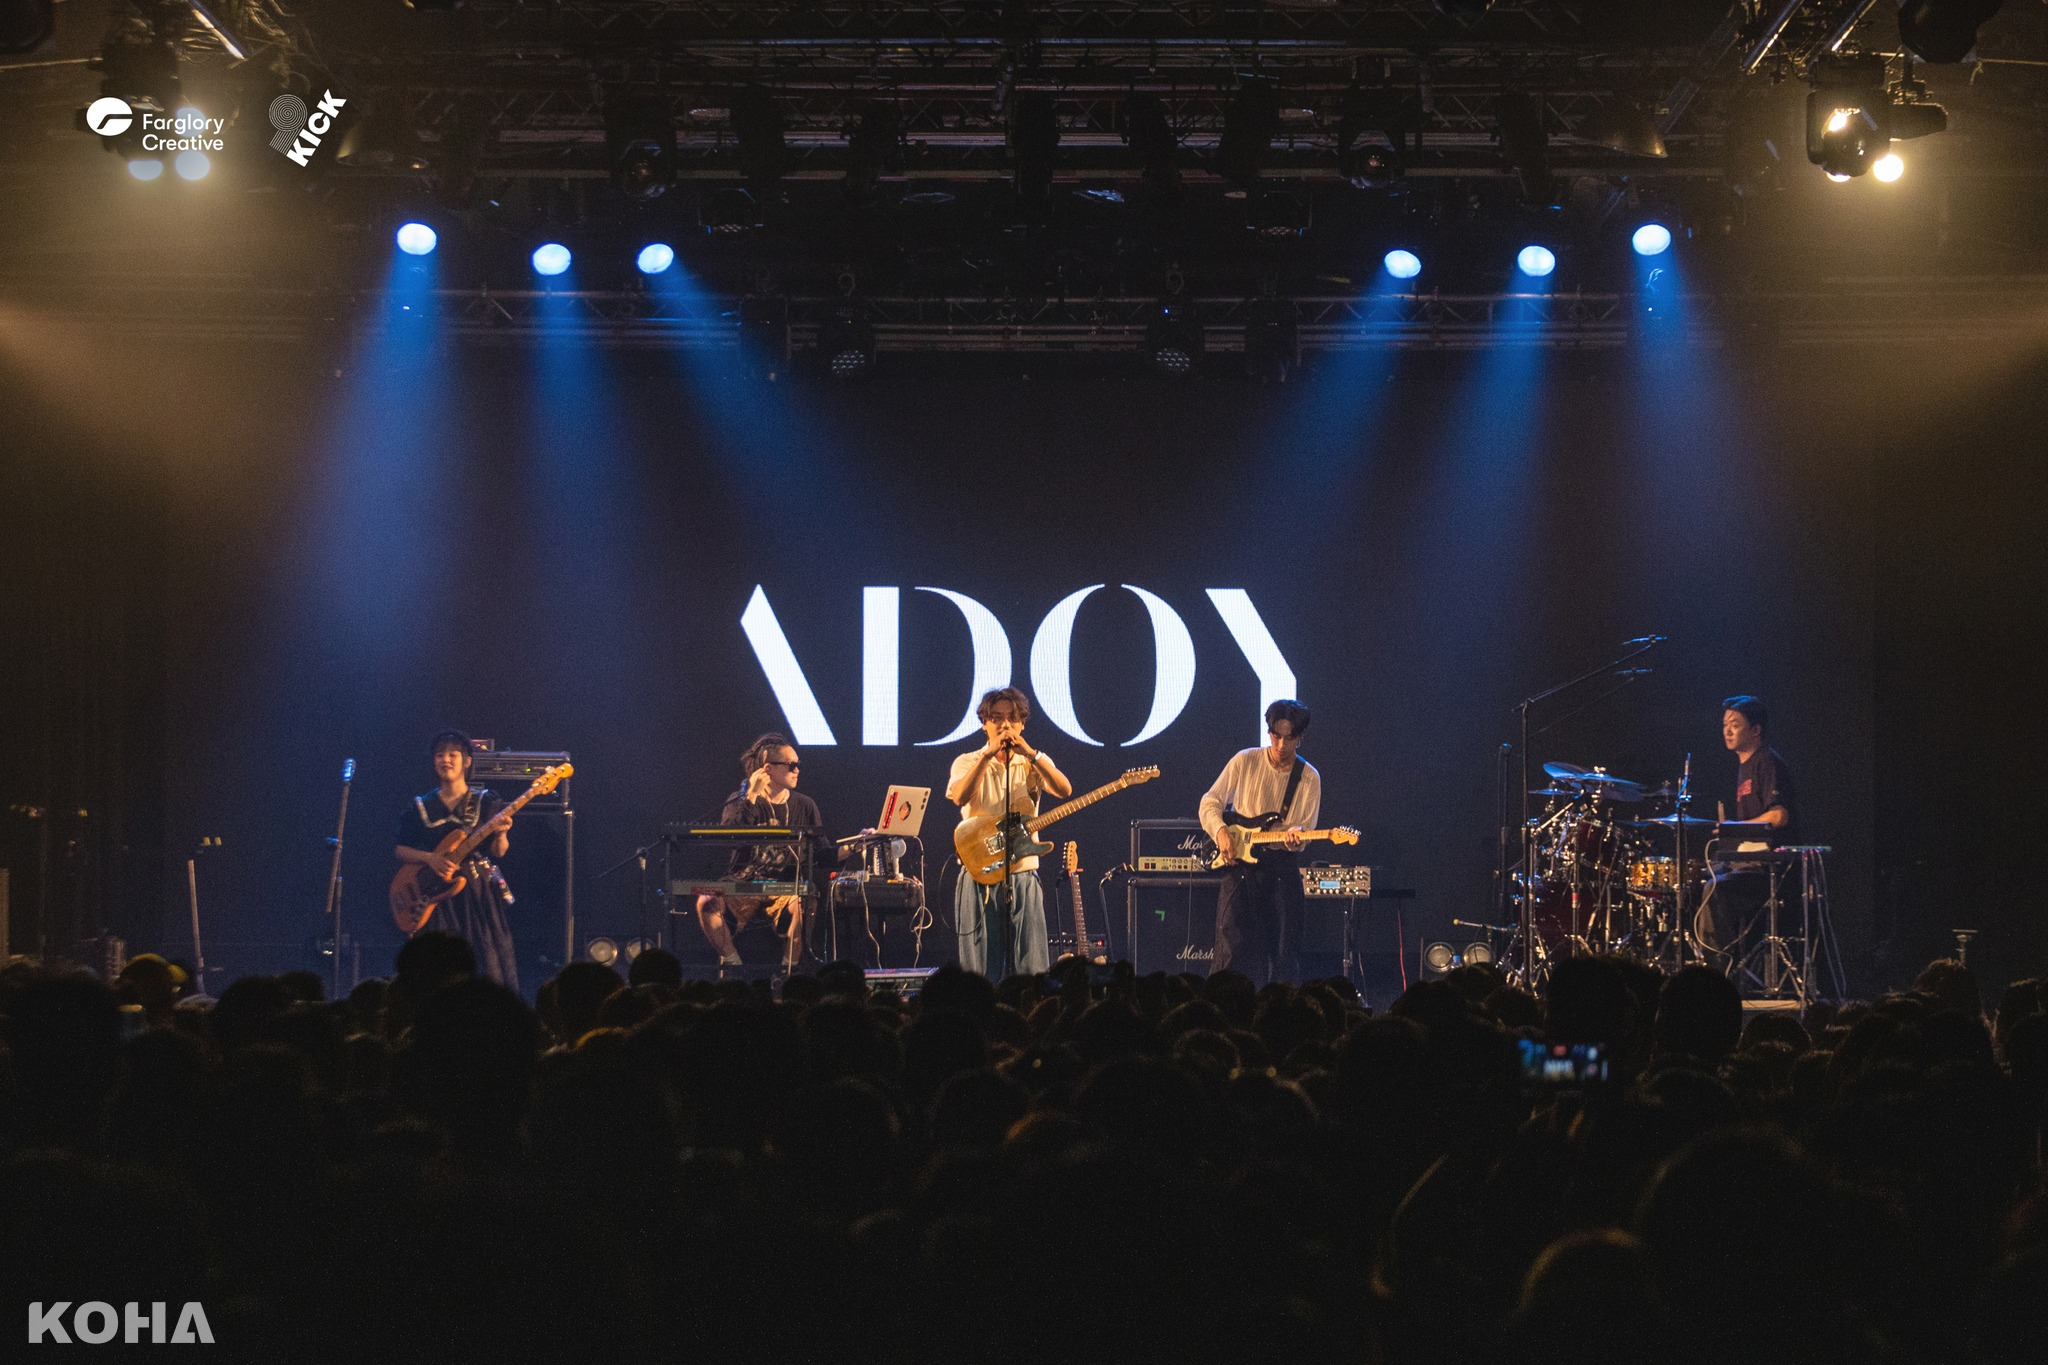 ADOY 為 2016 年於首爾成軍的 Synth pop 樂團，團名由主唱的貓「YODA」之名反轉而來。 1 1